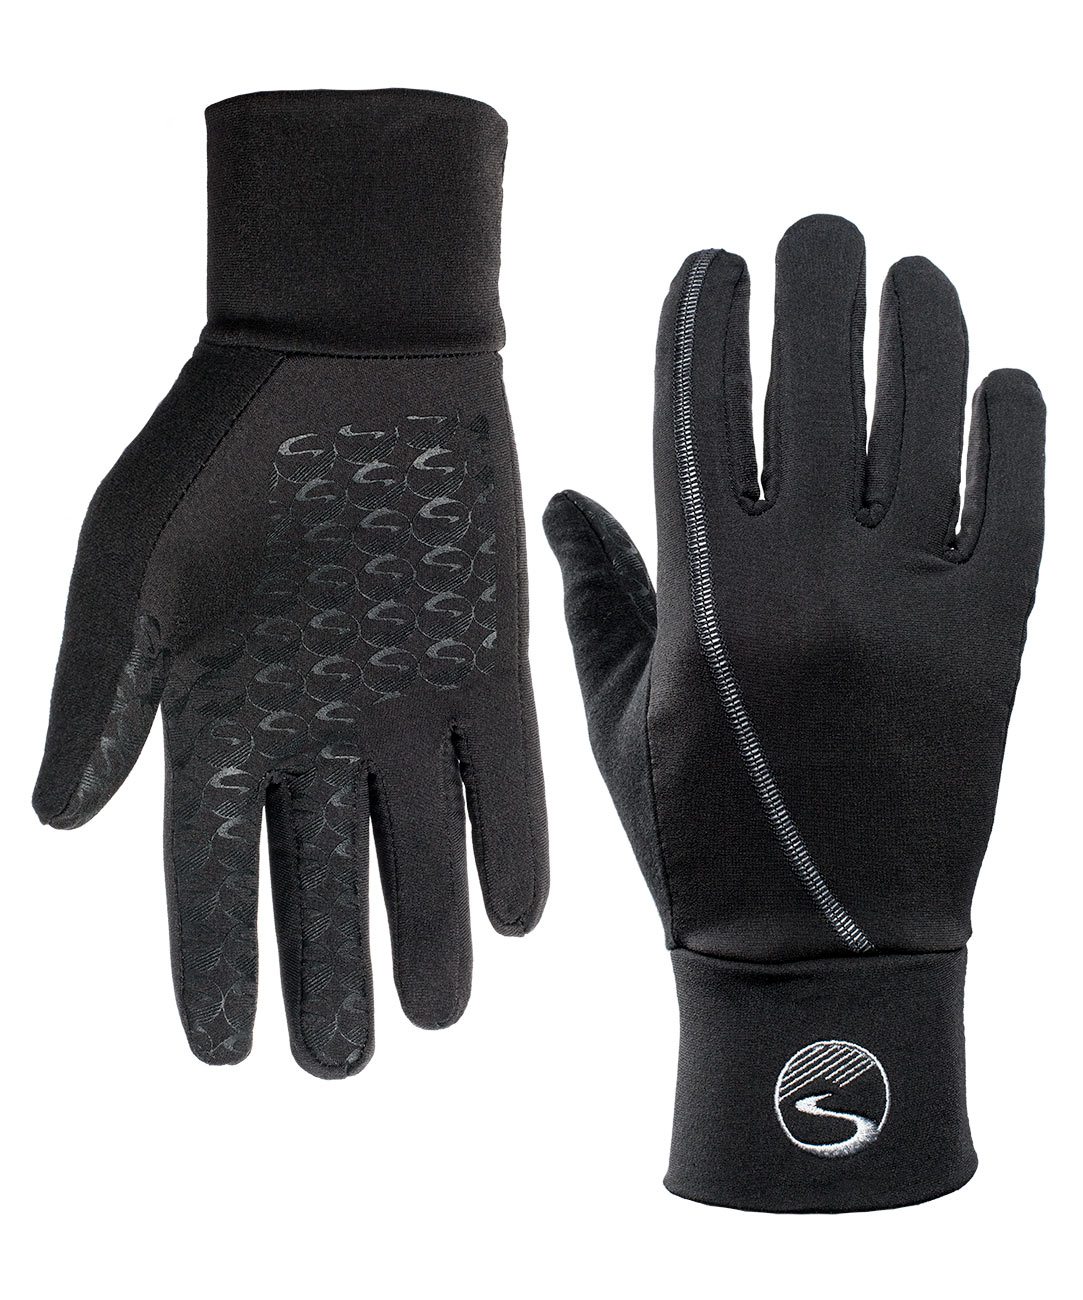 Men's Crosspoint Touch Screen Liner Glove